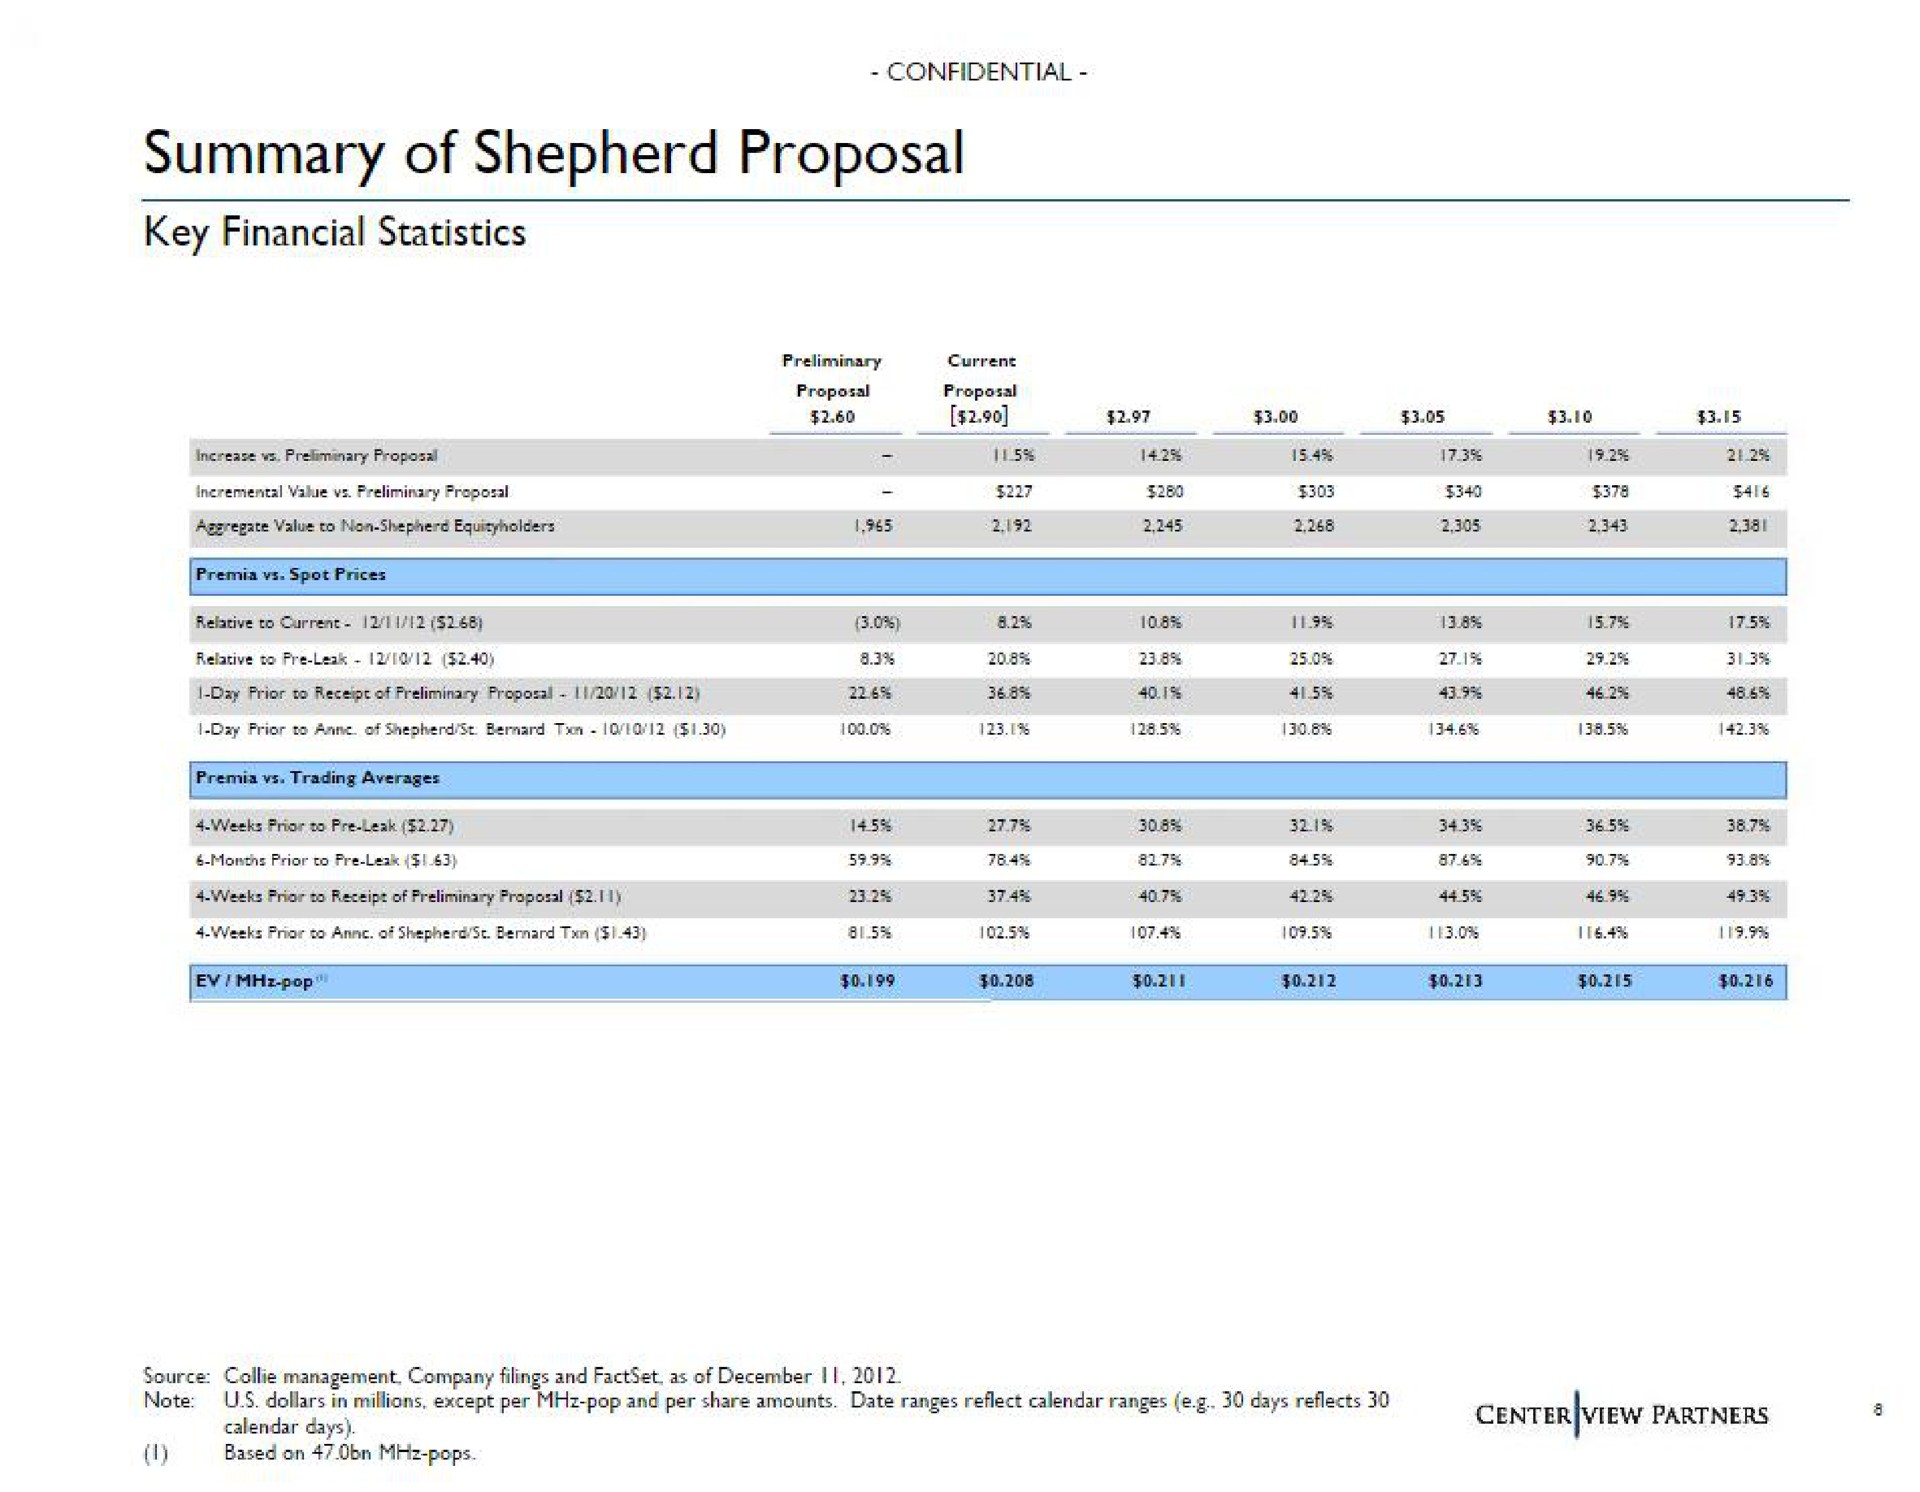 summary of shepherd proposal | Centerview Partners